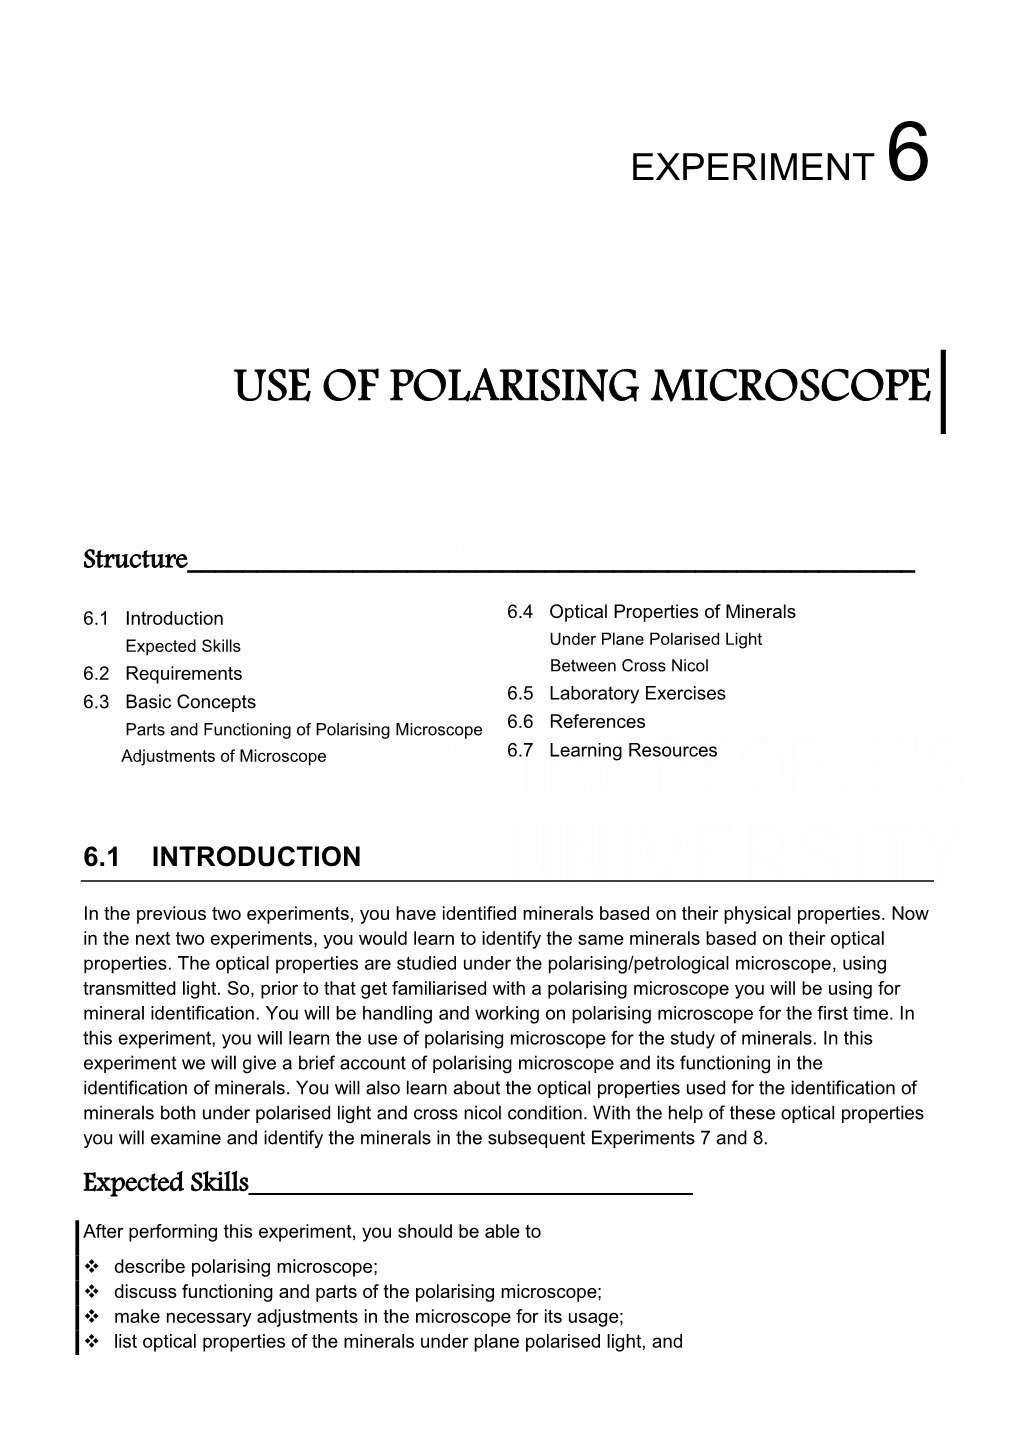 Use of Polarising Microscope